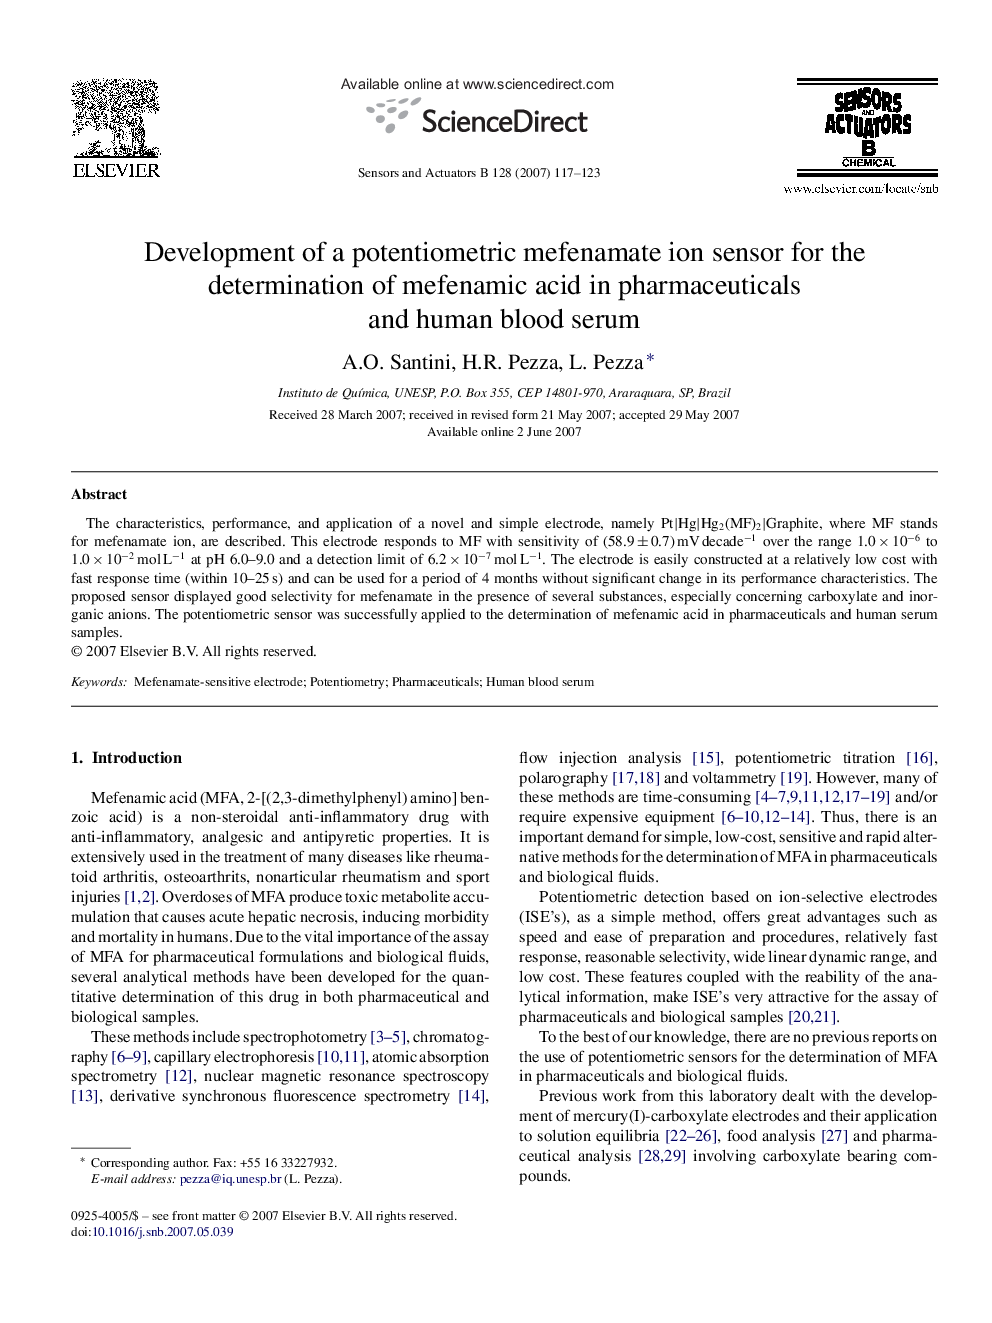 Development of a potentiometric mefenamate ion sensor for the determination of mefenamic acid in pharmaceuticals and human blood serum